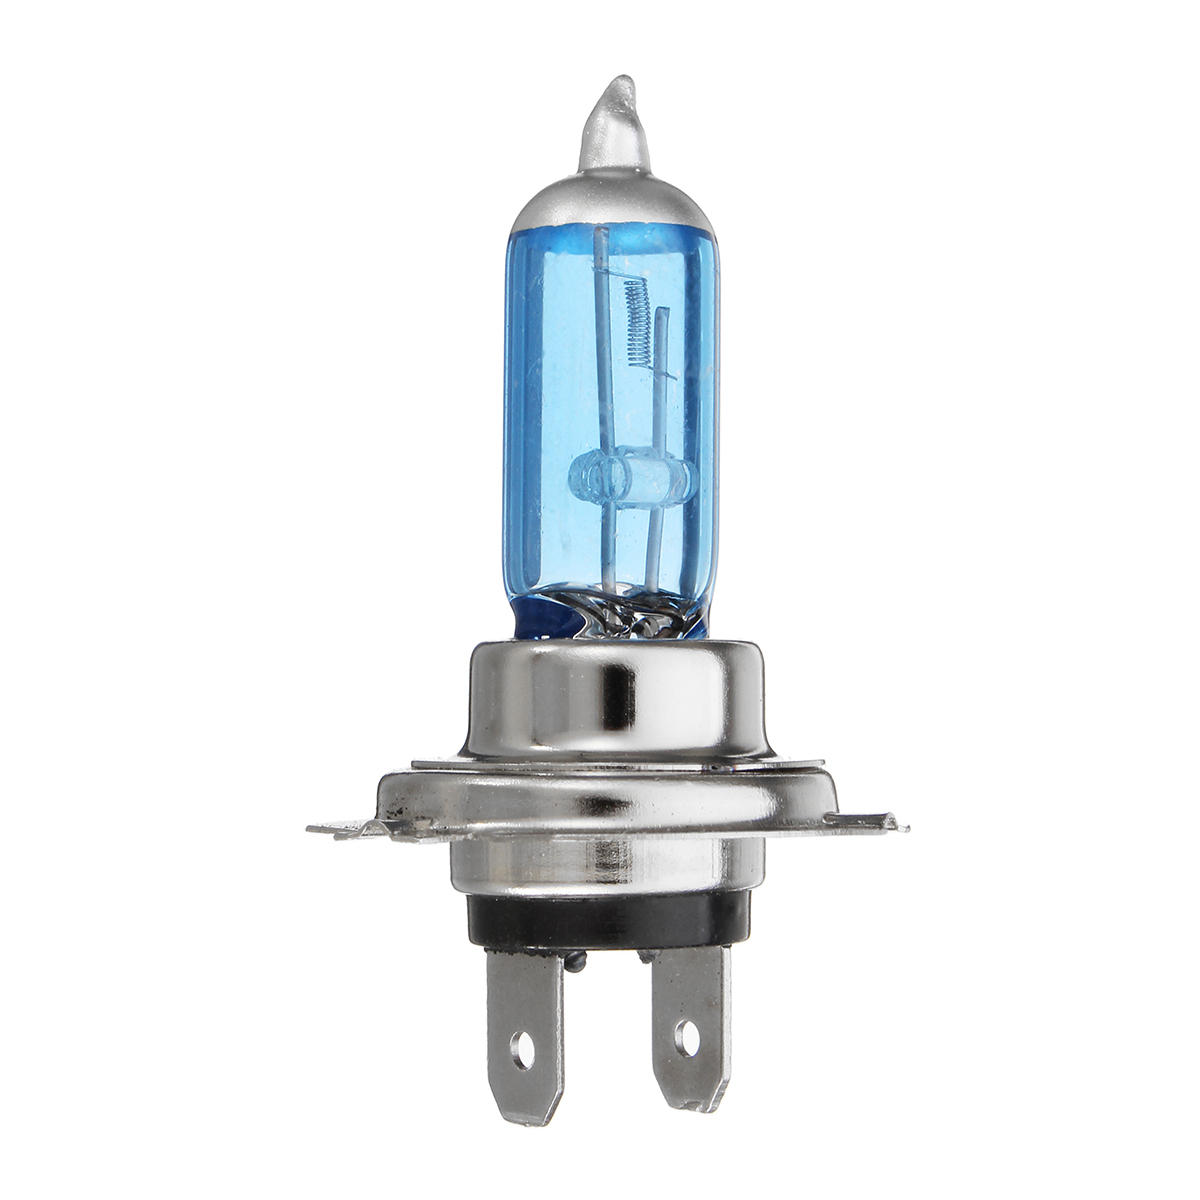 1pcs h7 car halogen headlight bulb lamp dc12v 100w ip67 6300k xenon